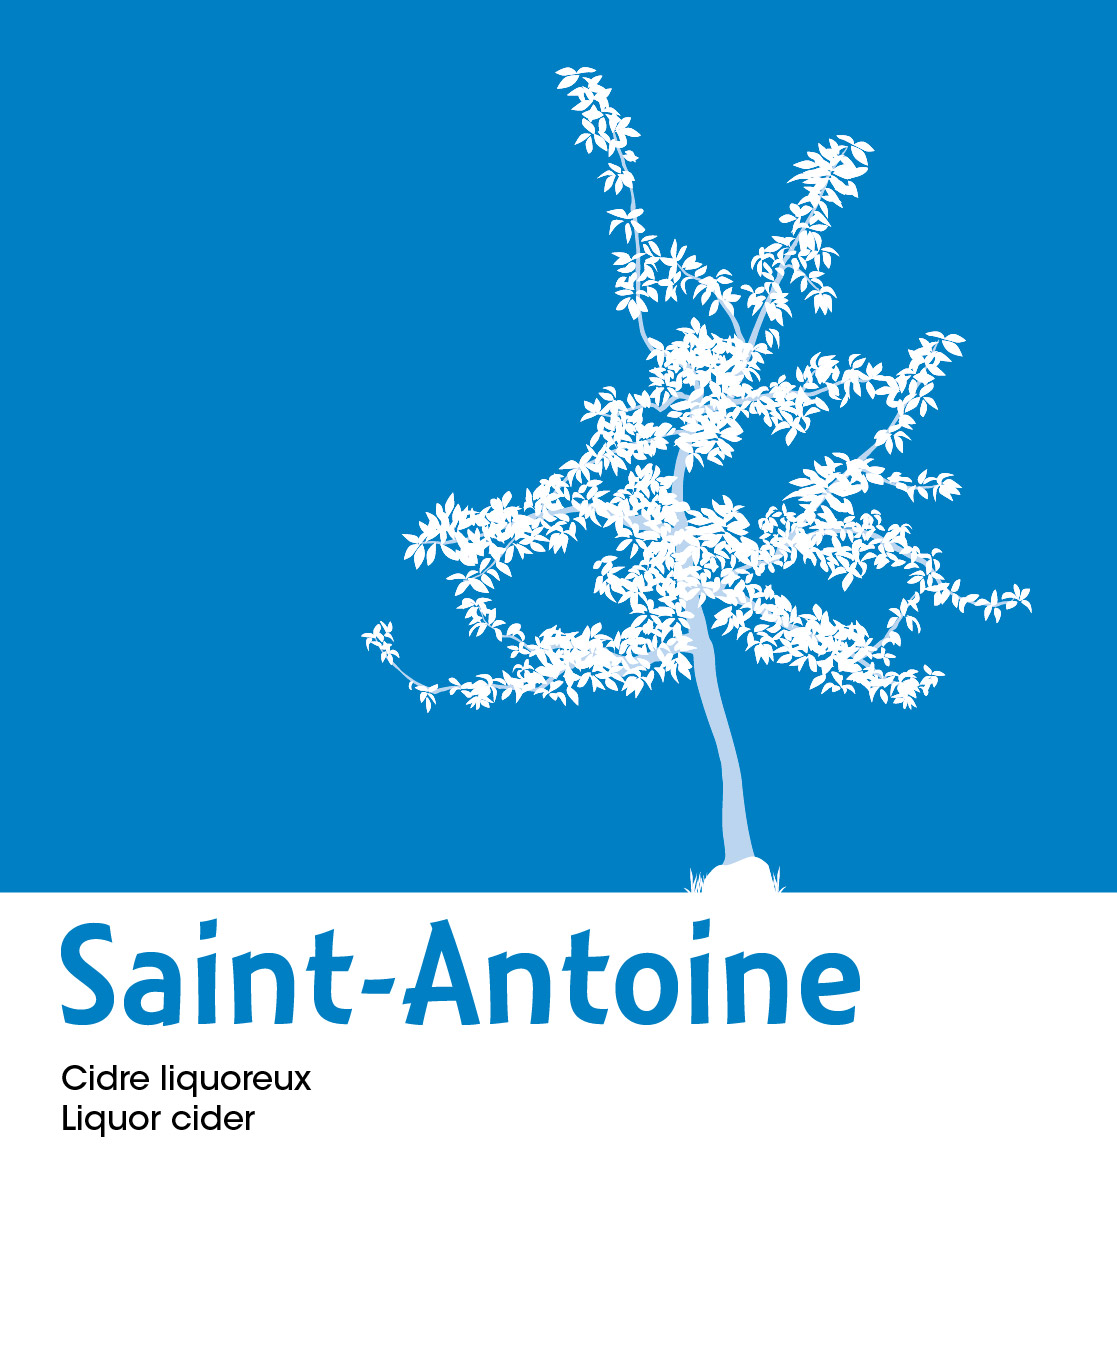 Saint-Antoine